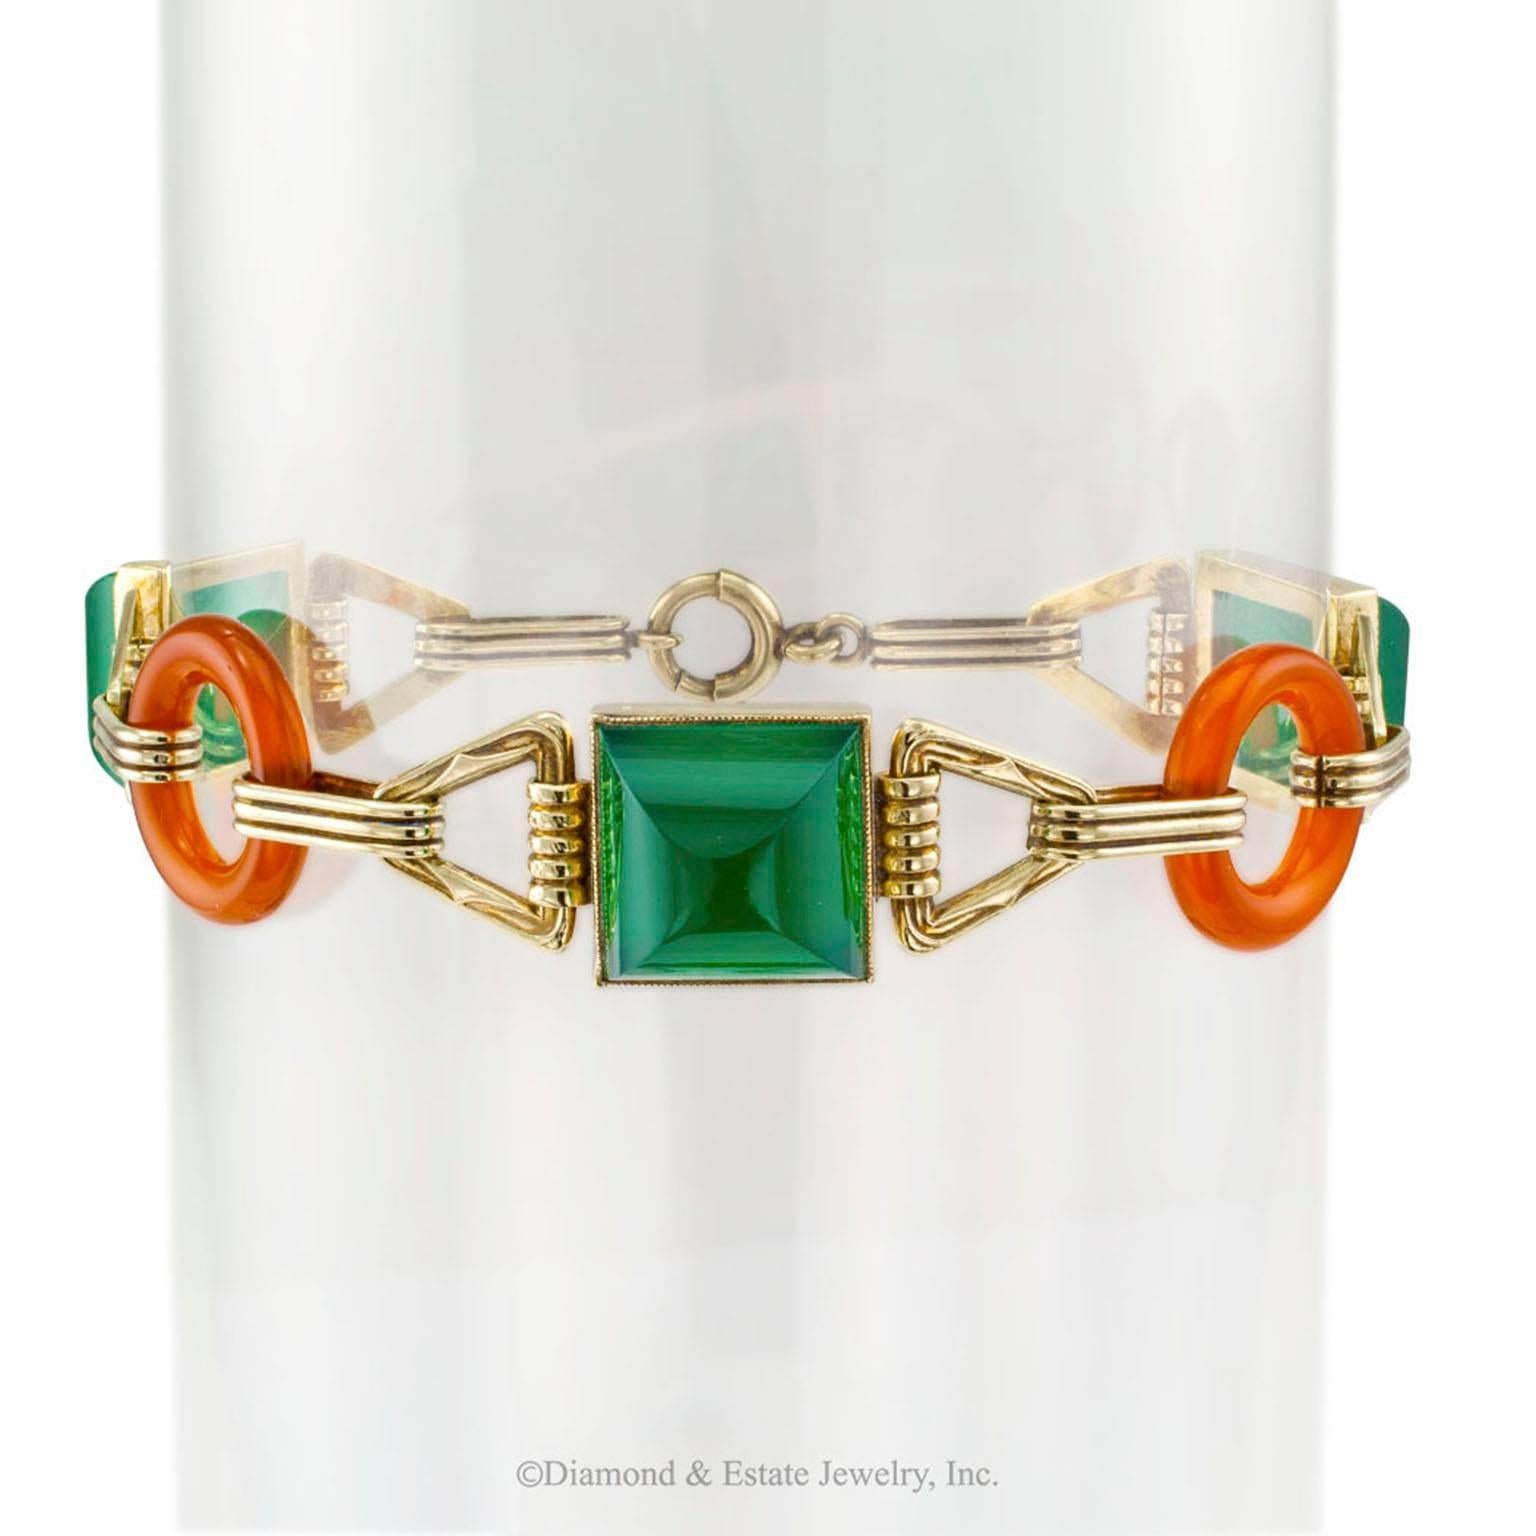 Art Deco 1930s Green Onyx Carnelian Gold Bracelet

Art Deco 1930s green onyx carnelian and 14-karat gold link bracelet.  Comprising a pair of carnelian circular links at even intervals between a trio of bezel-set  sugar-loaf green onyx cabochons,